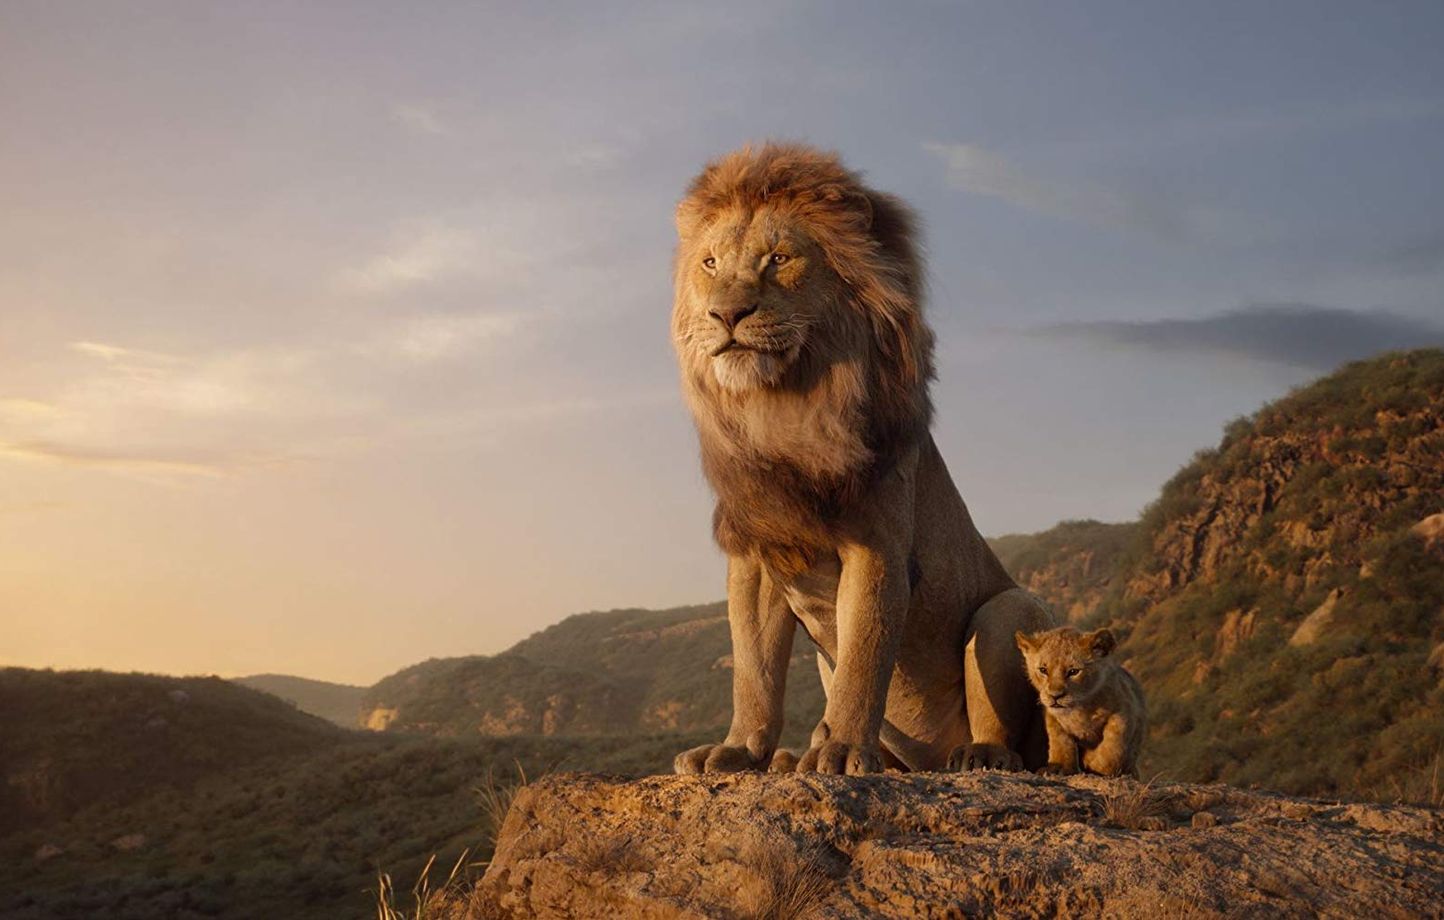 “The Lion King” by Jon Favreau 